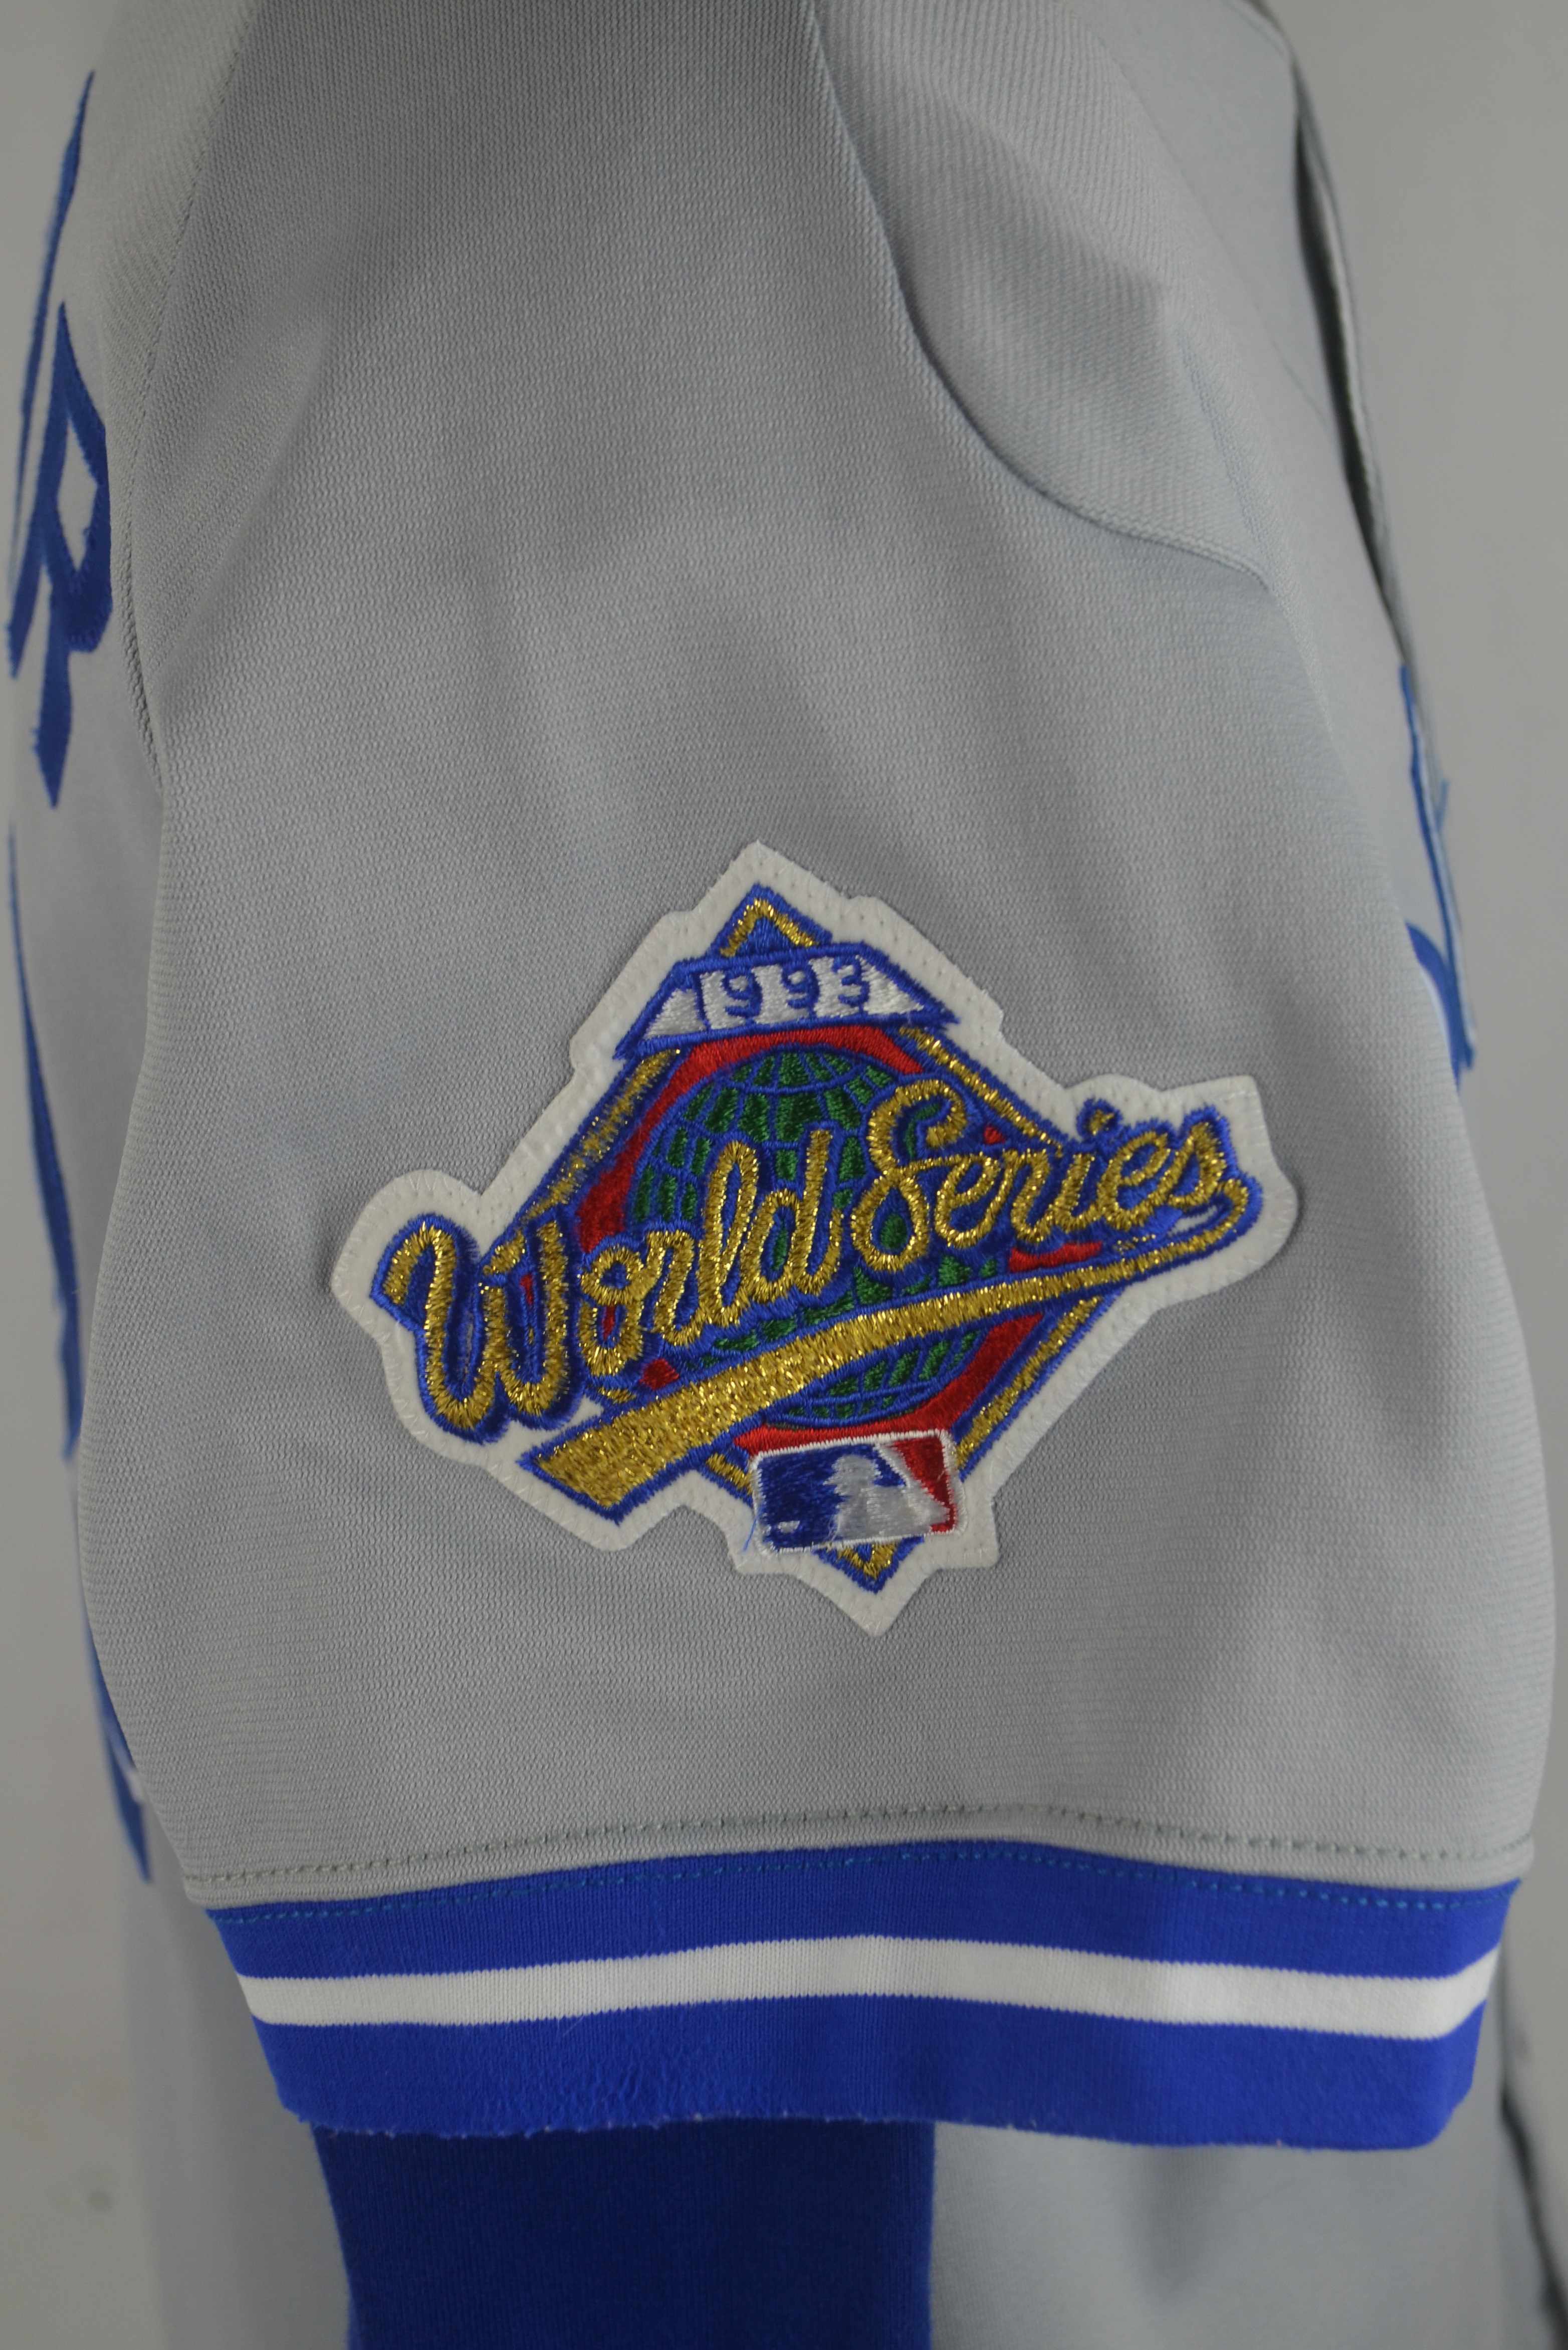 Roberto Alamar Mitchell & Ness Toranto Blue Jays Baseball Jersey (XXLarge)  (W40)